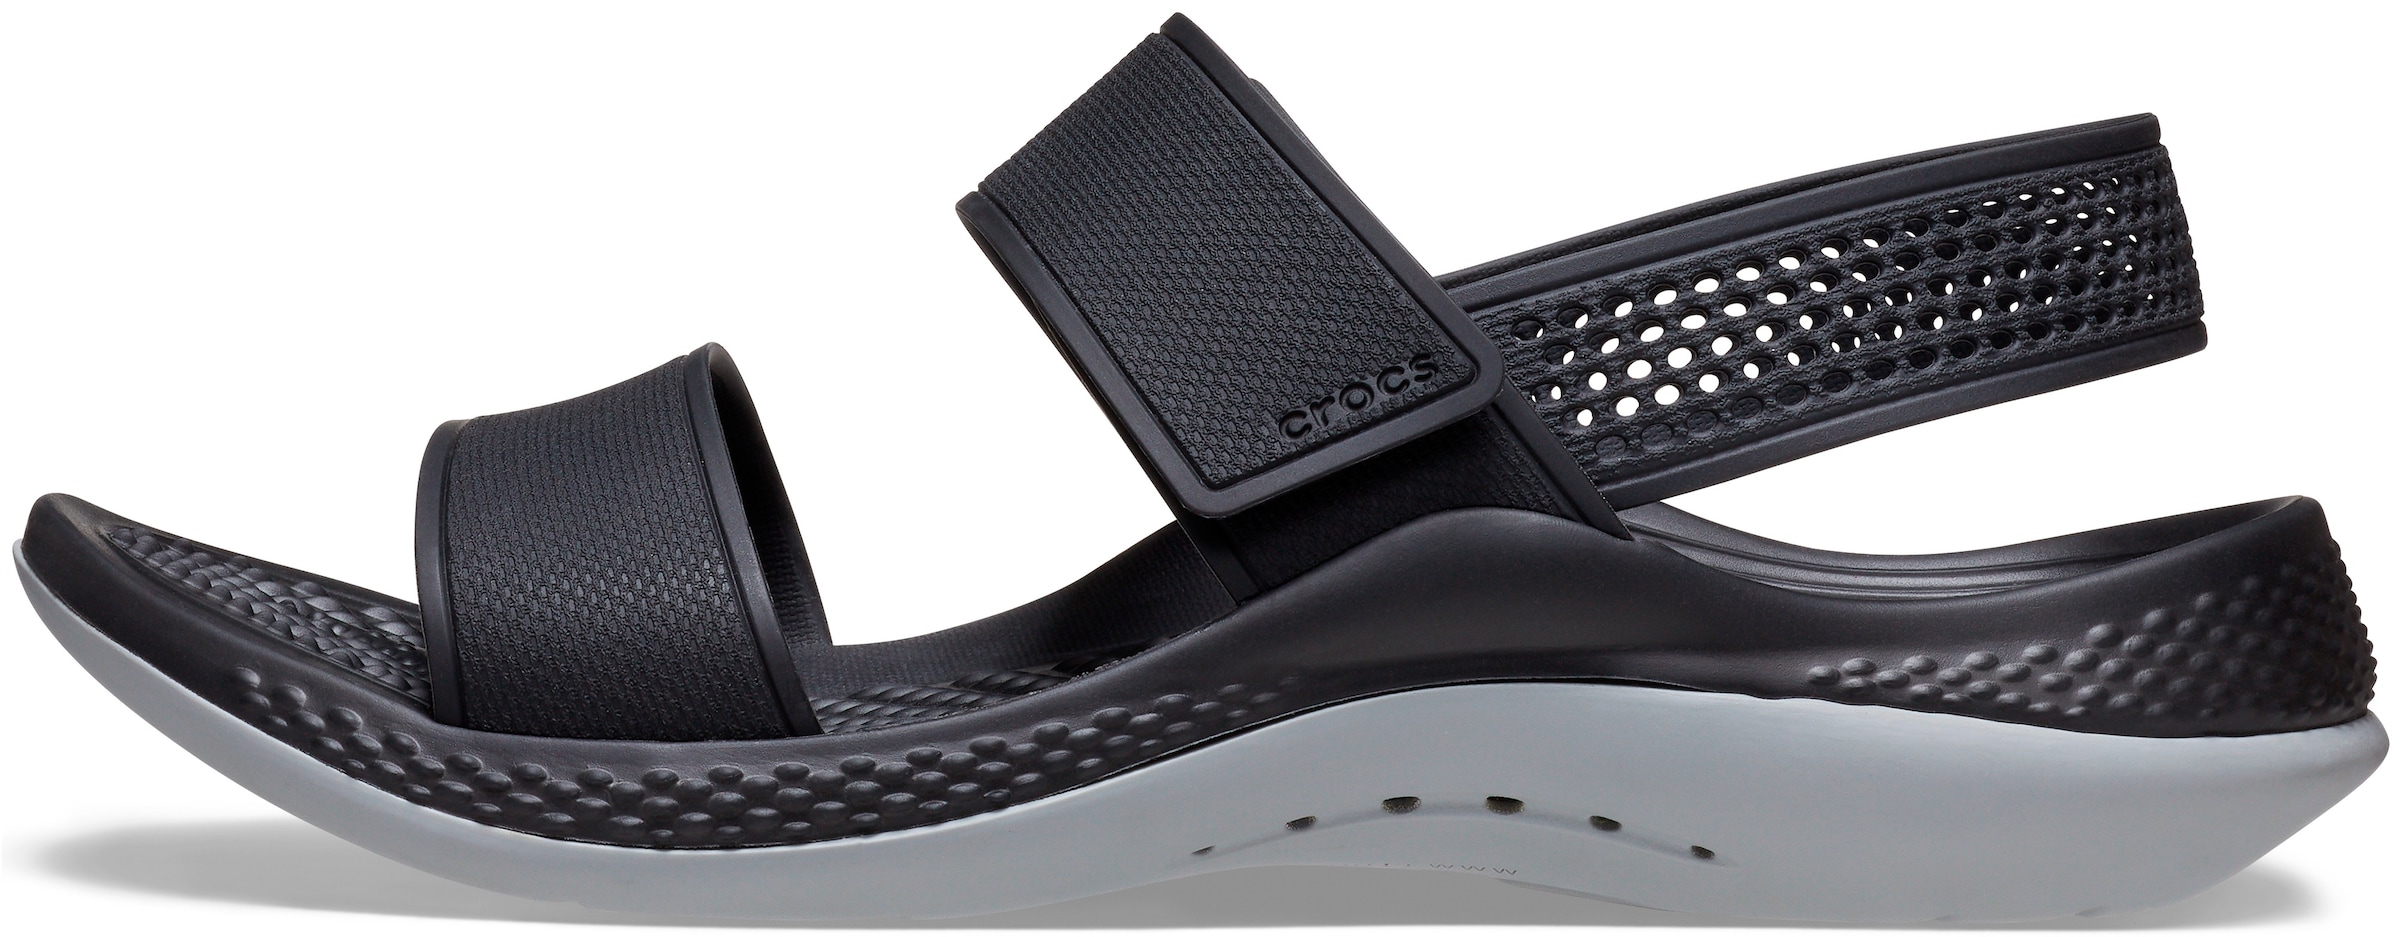 Crocs Sandale »LiteRide 360 Sandal«, Sommerschuh, Sandalette, Riemchensandale, mit flexibler Laufsohle